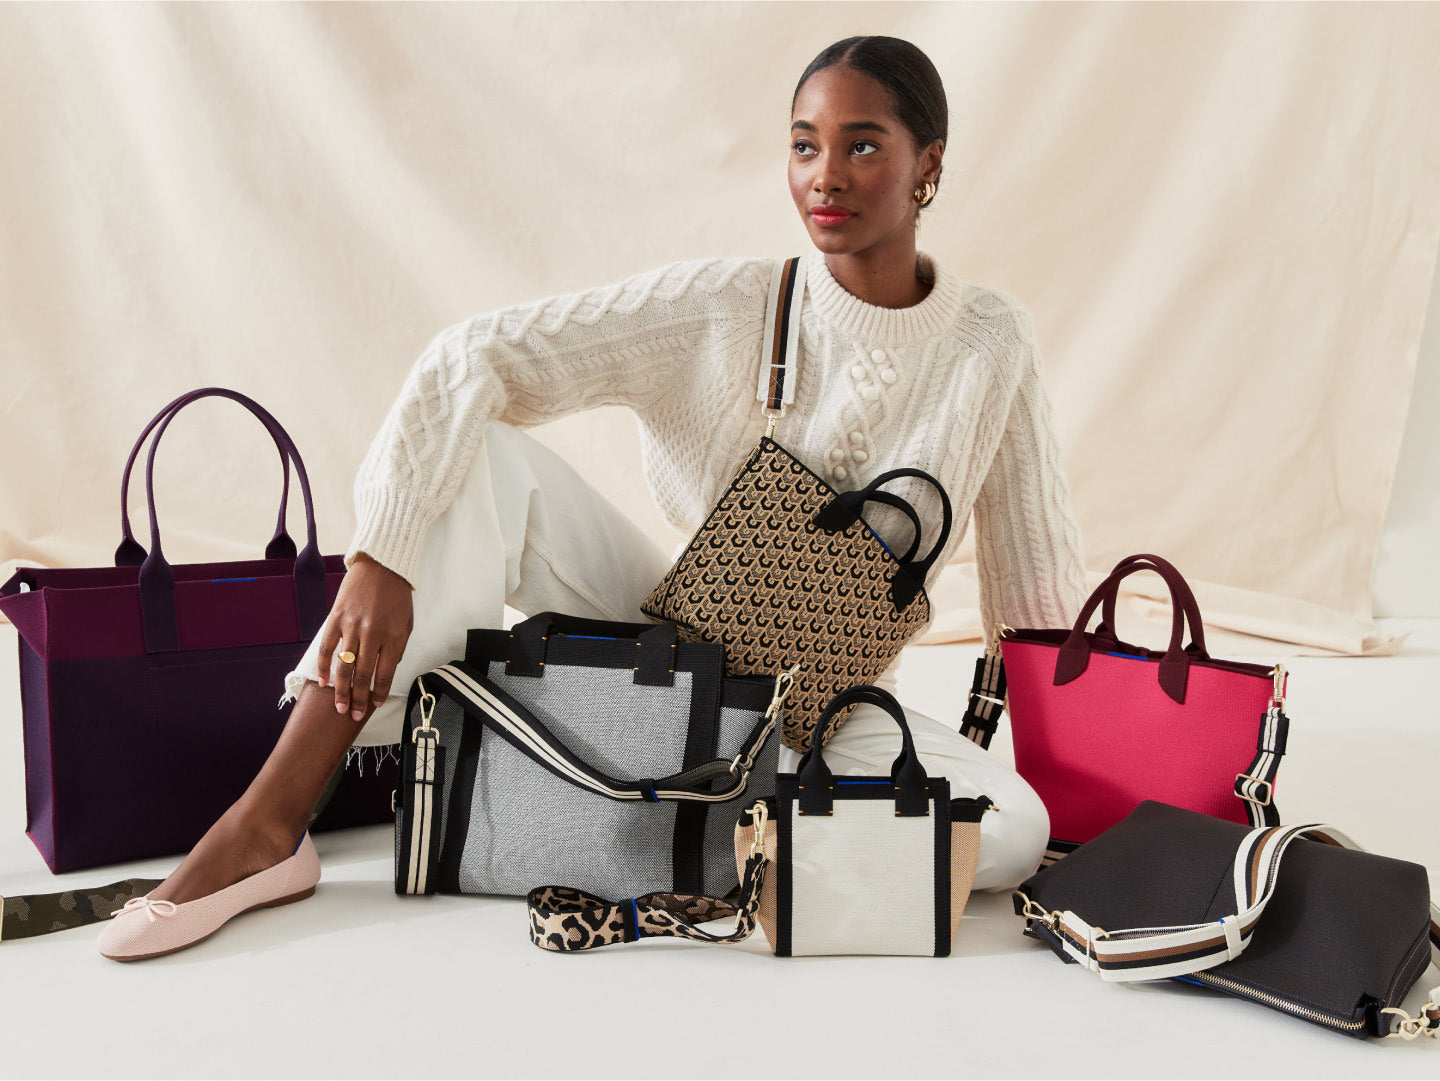 Help choosing a new bag! : r/handbags